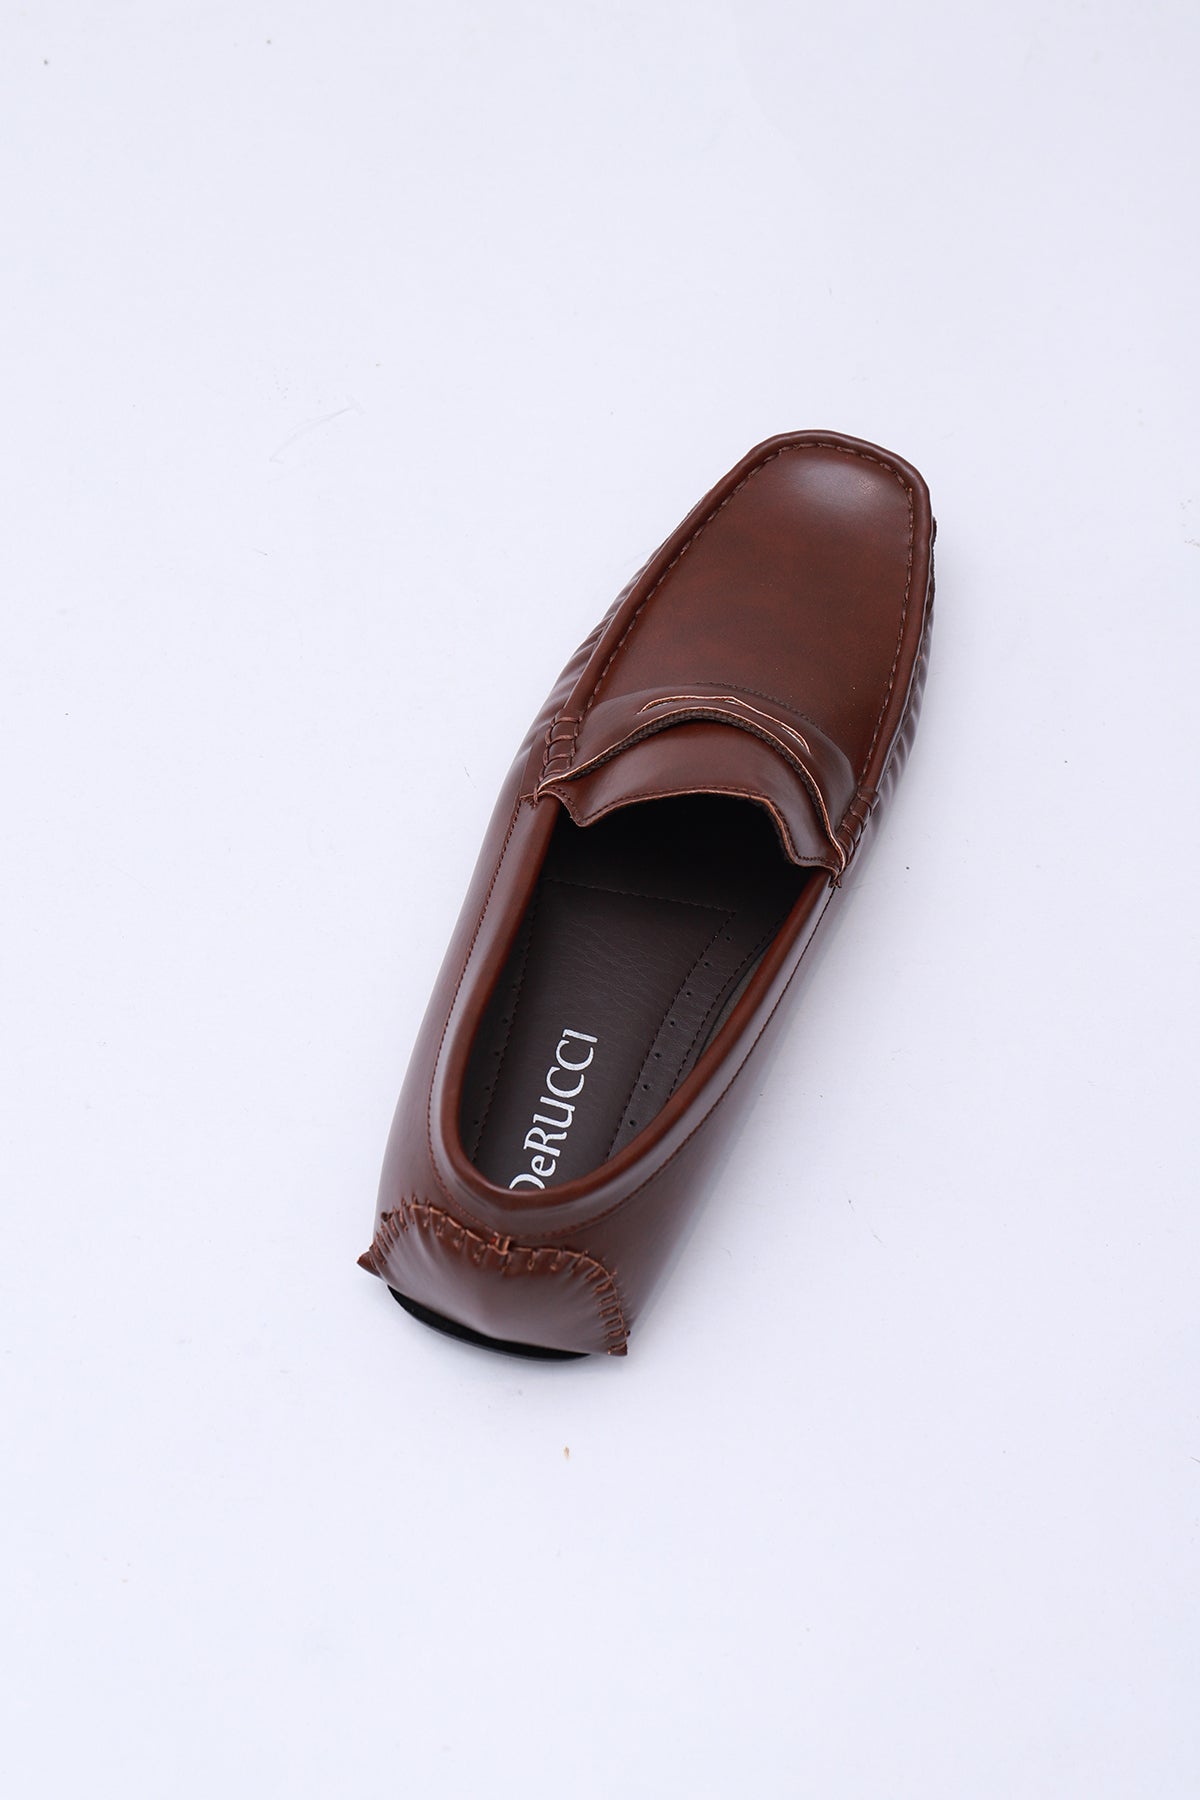 Derucci Men's Casual Shoe